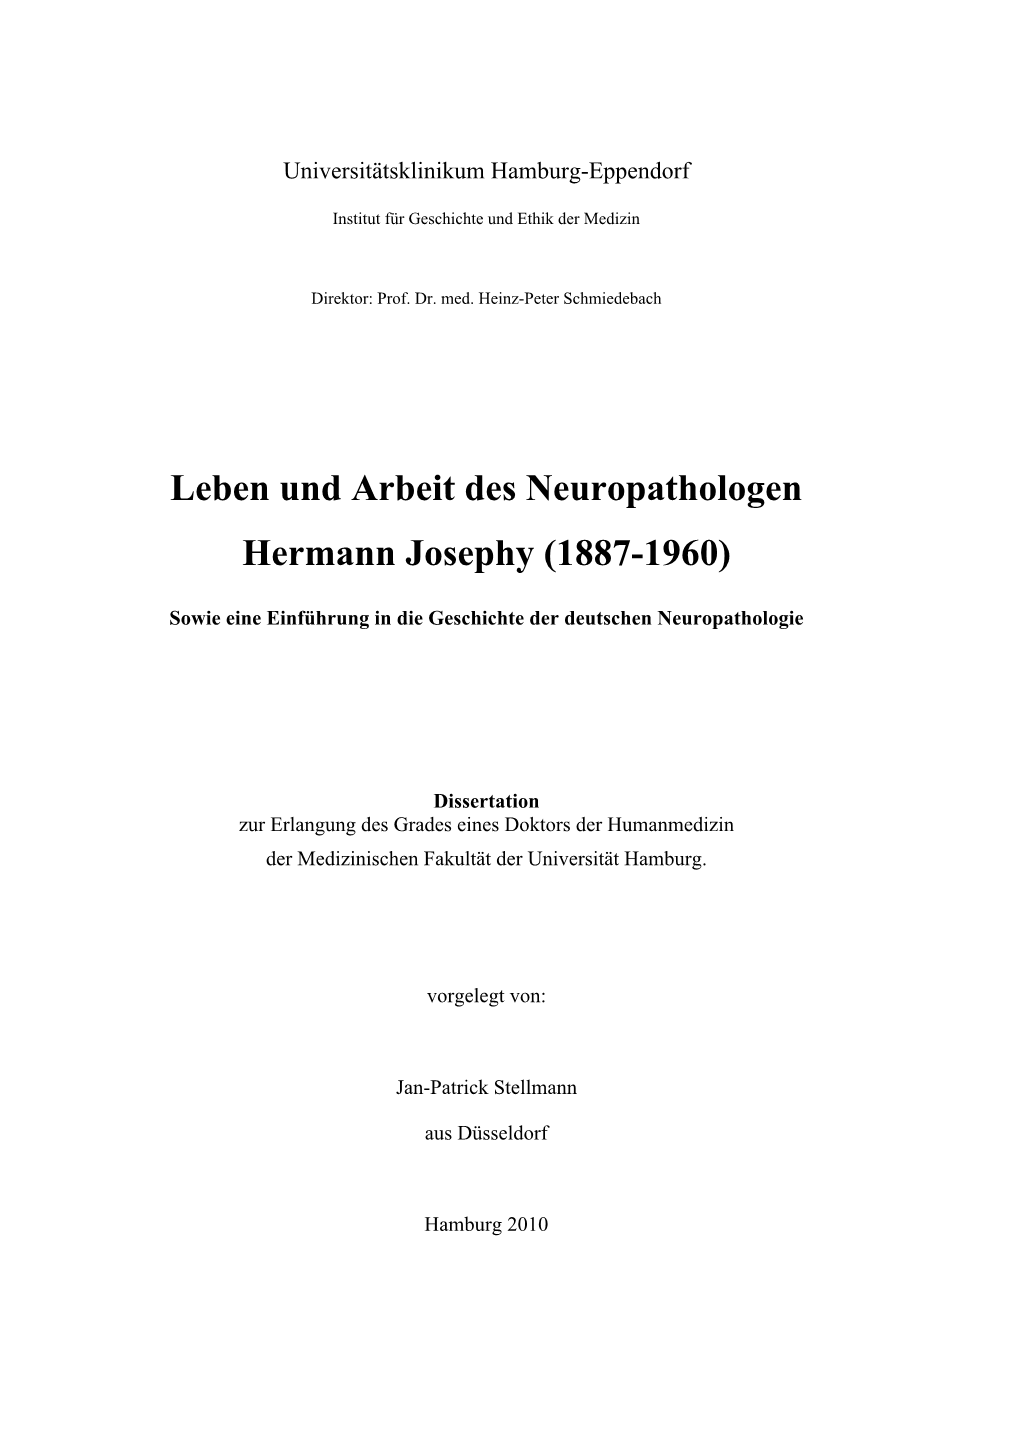 Biographie Hermann Josephy